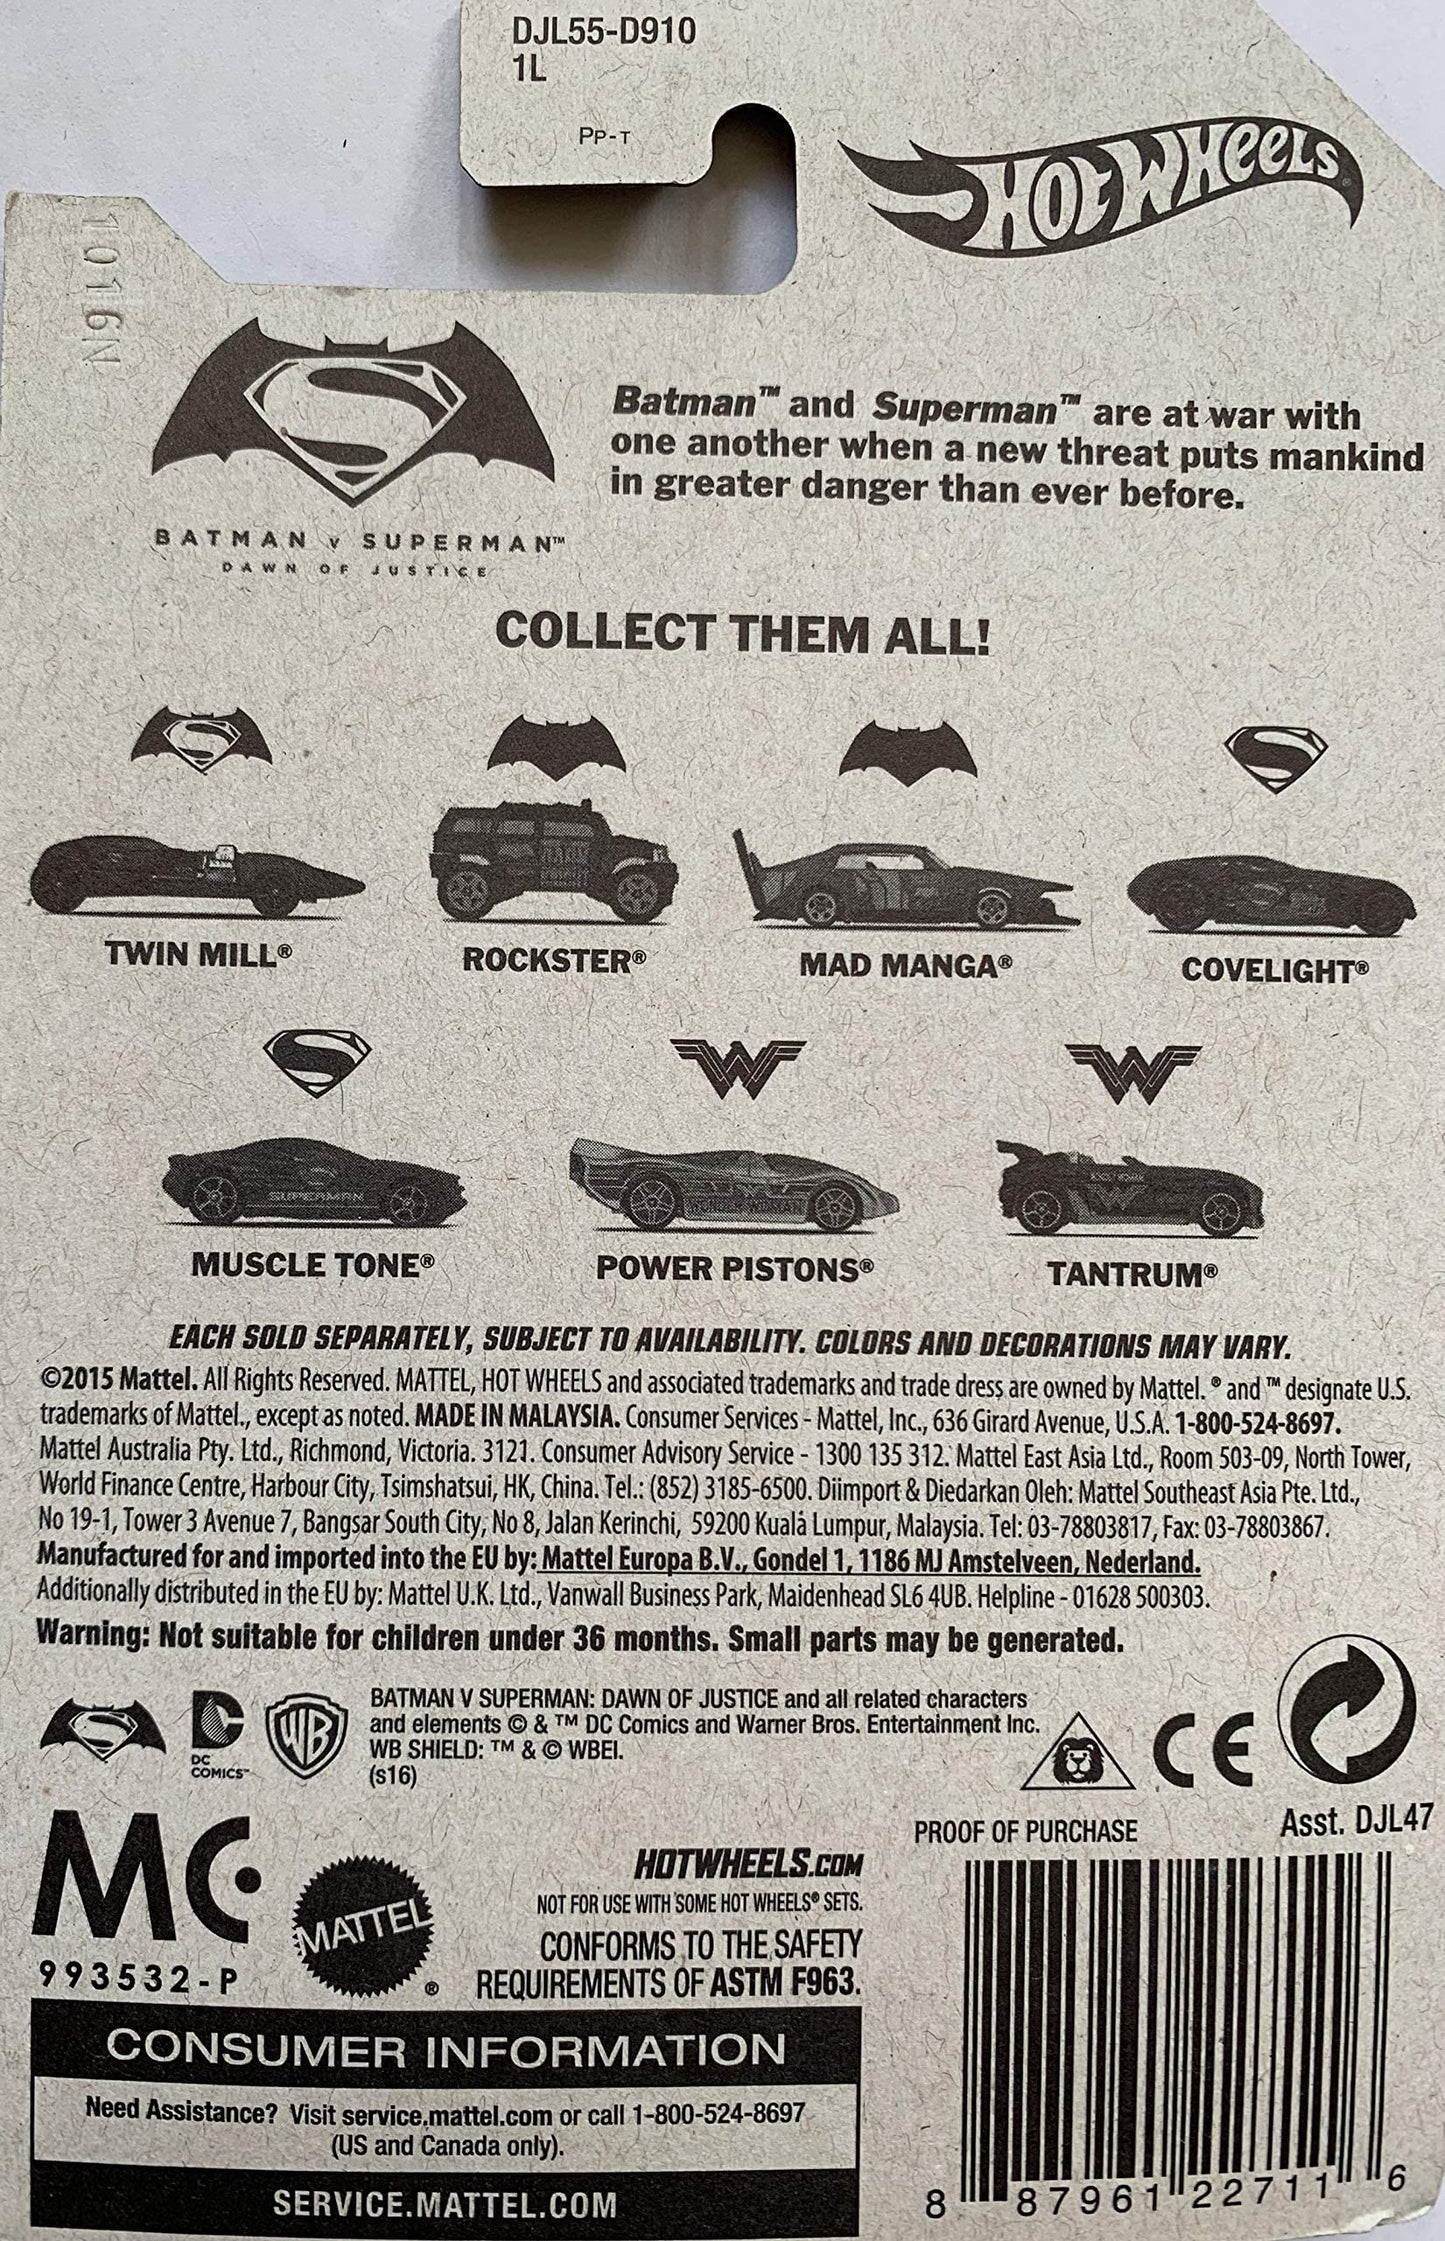 Mattel Hot Wheels 2015 No. 2/7 Batman Vs Superman The Rockster Die-Cast Replica Model Vehicle - Brand New Factory Sealed Shop Stock Room Find